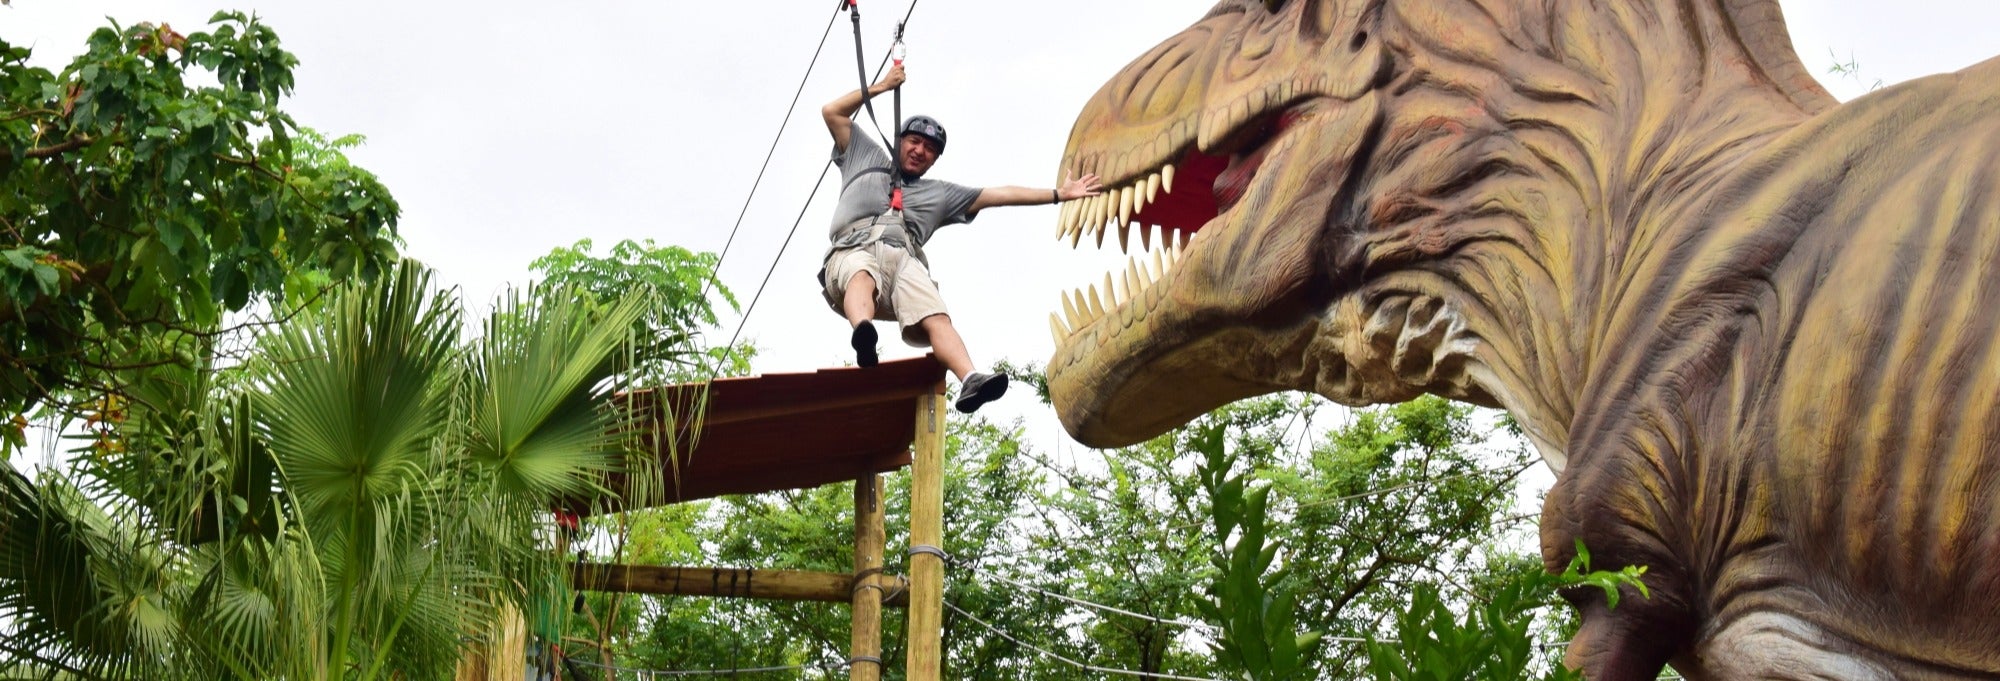 Ingresso do parque Dino Adventure 